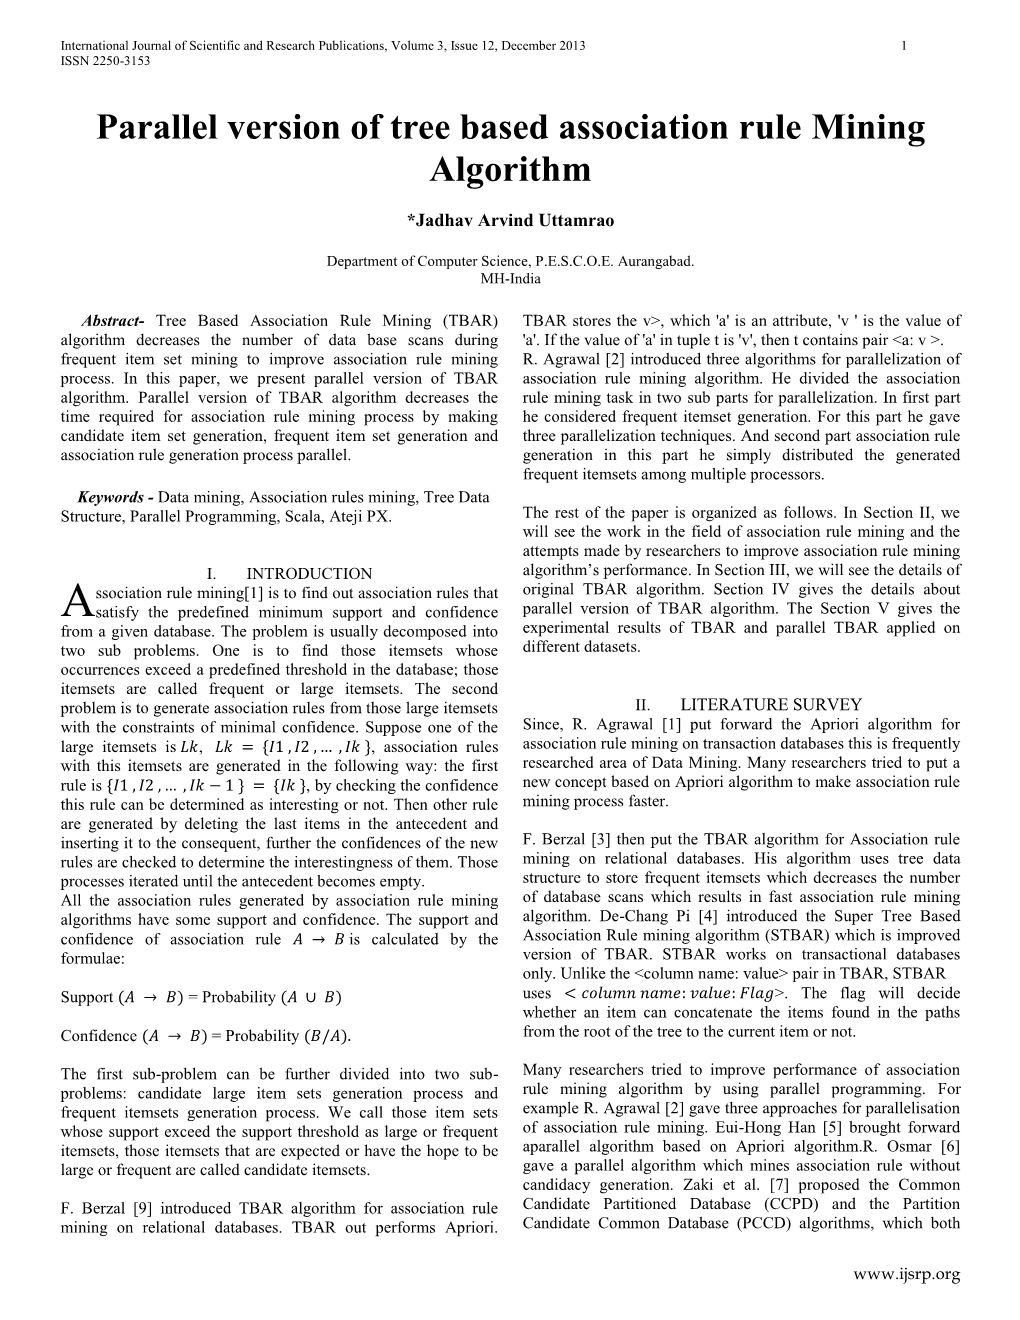 Parallel Version of Tree Based Association Rule Mining Algorithm